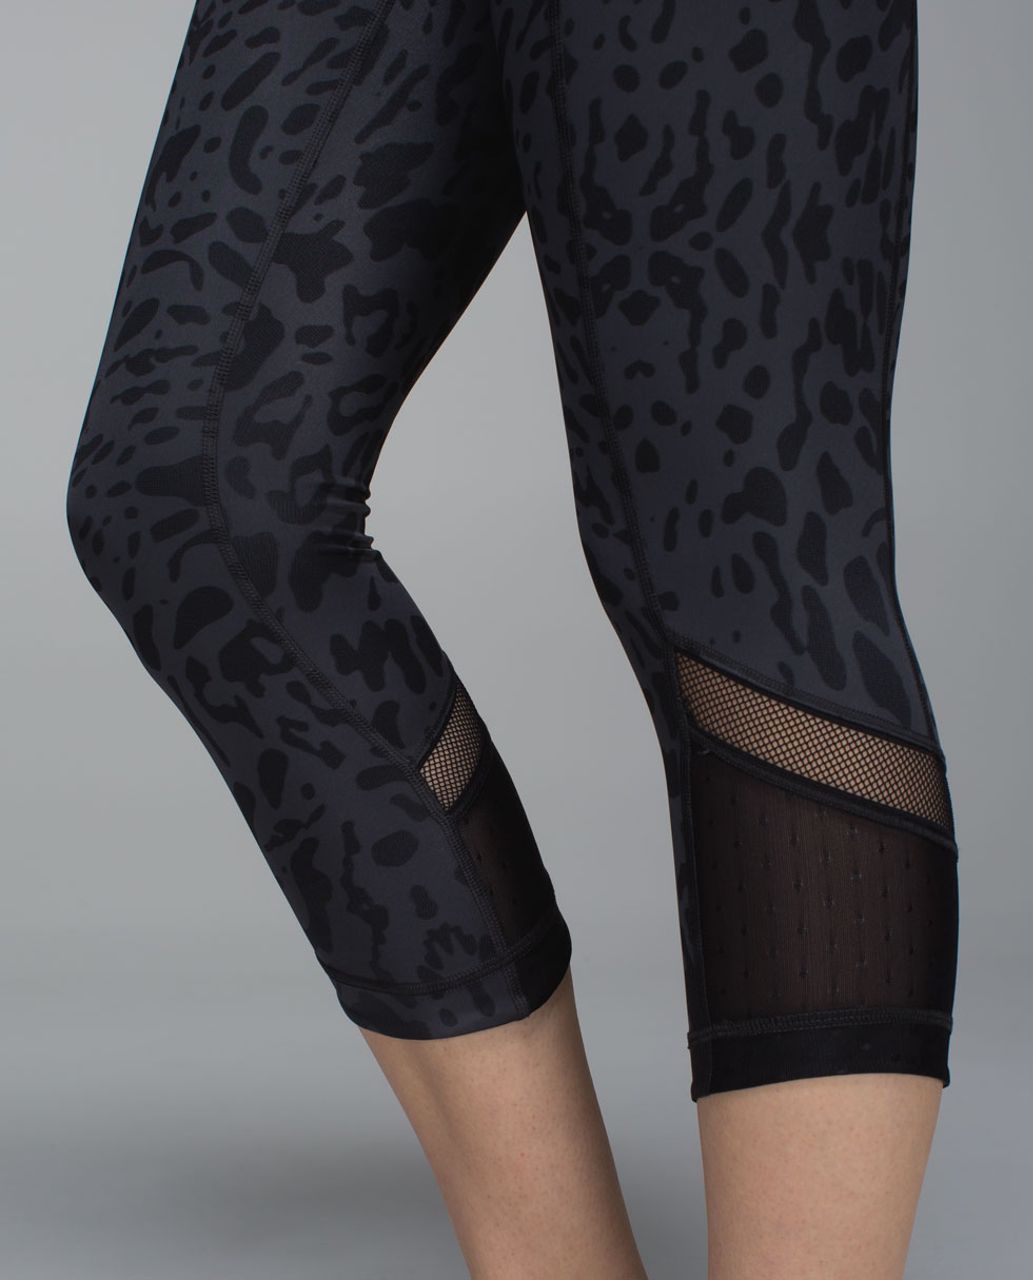 Lululemon Gray / Black Leopard Cheetah Animal Print Leggings Sz 6